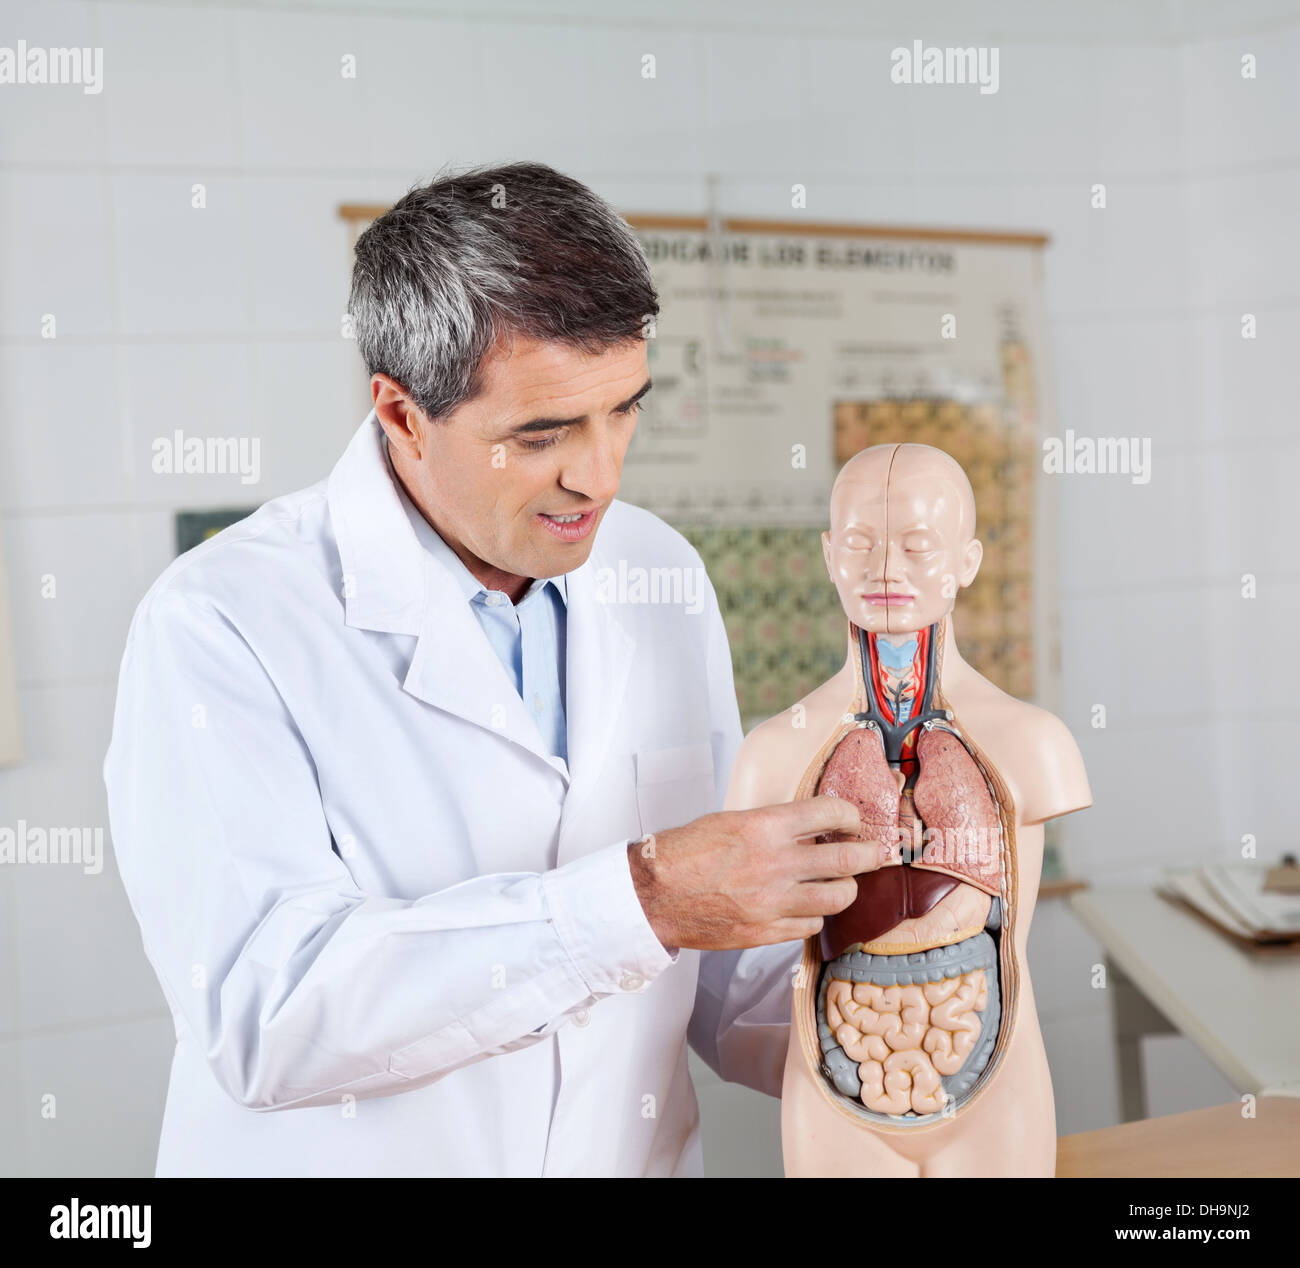 Teacher Analyzing Anatomical Model In Lab Stock Photo